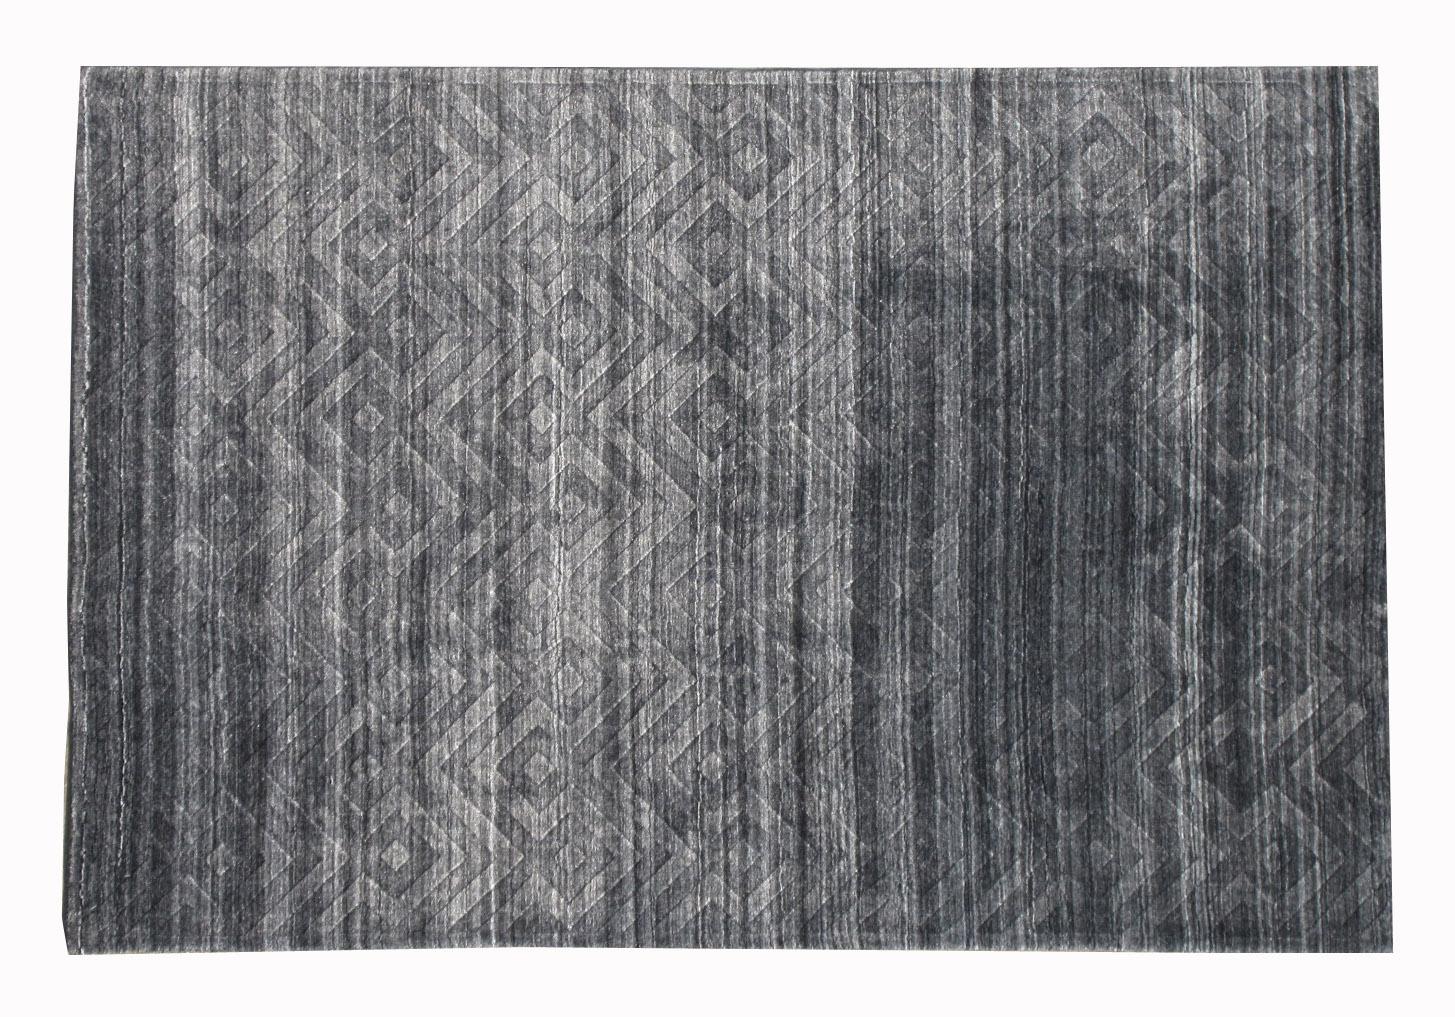 Handmade, high-low silk pile on a cotton foundation.

Modern trellis design.

Dimensions: 3'11